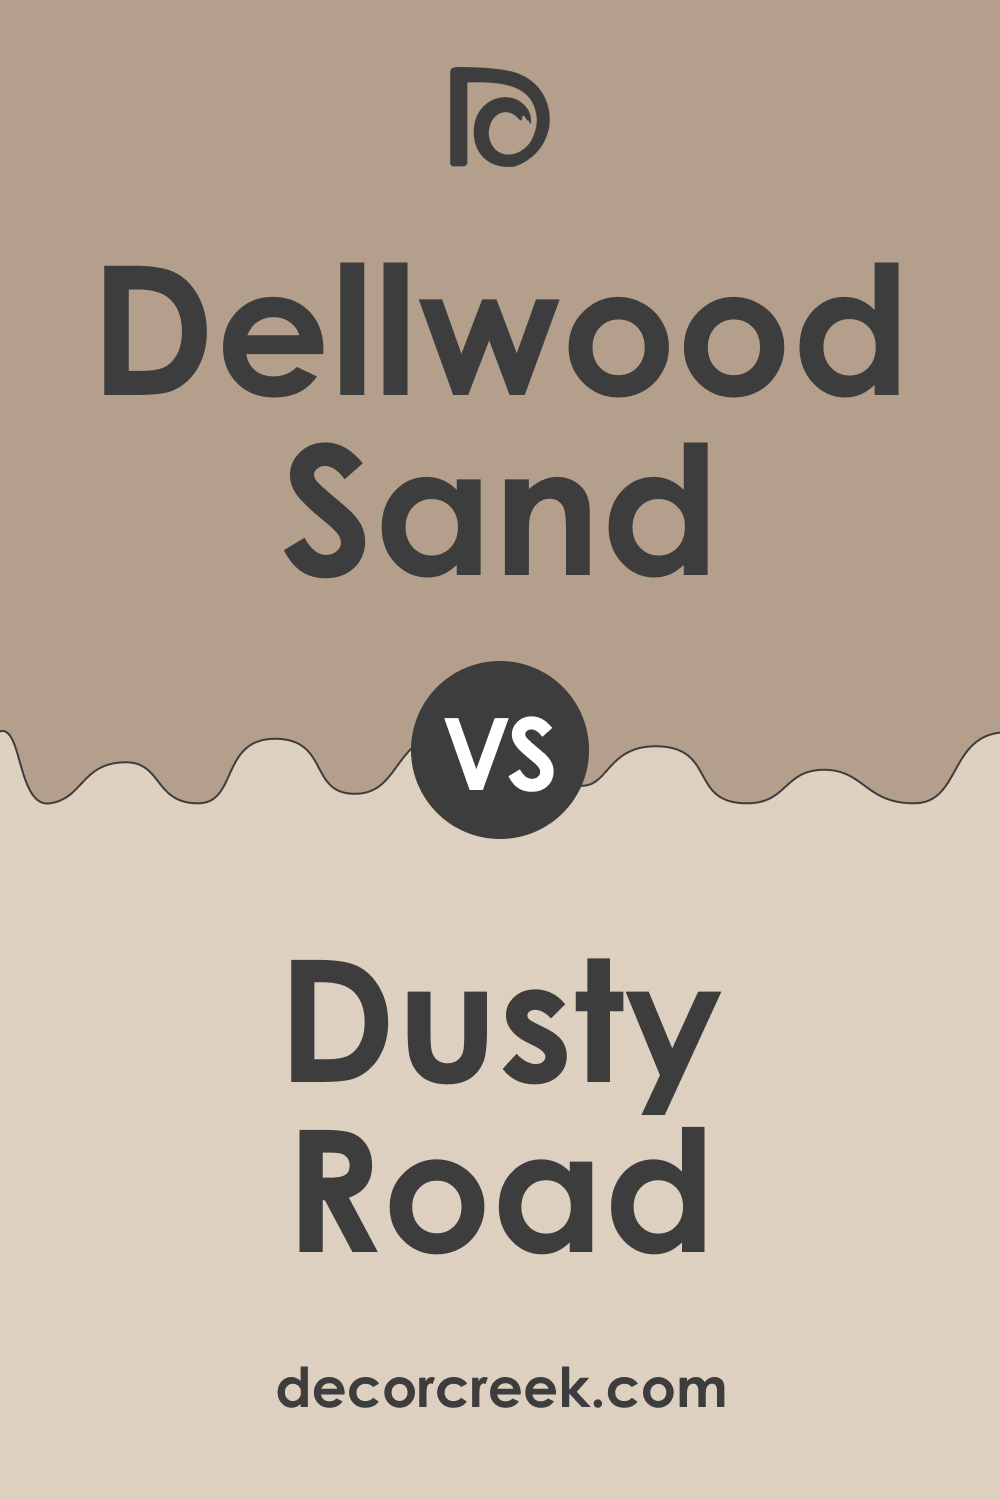 Dellwood Sand 1019 vs. BM 1017 Dusty Road